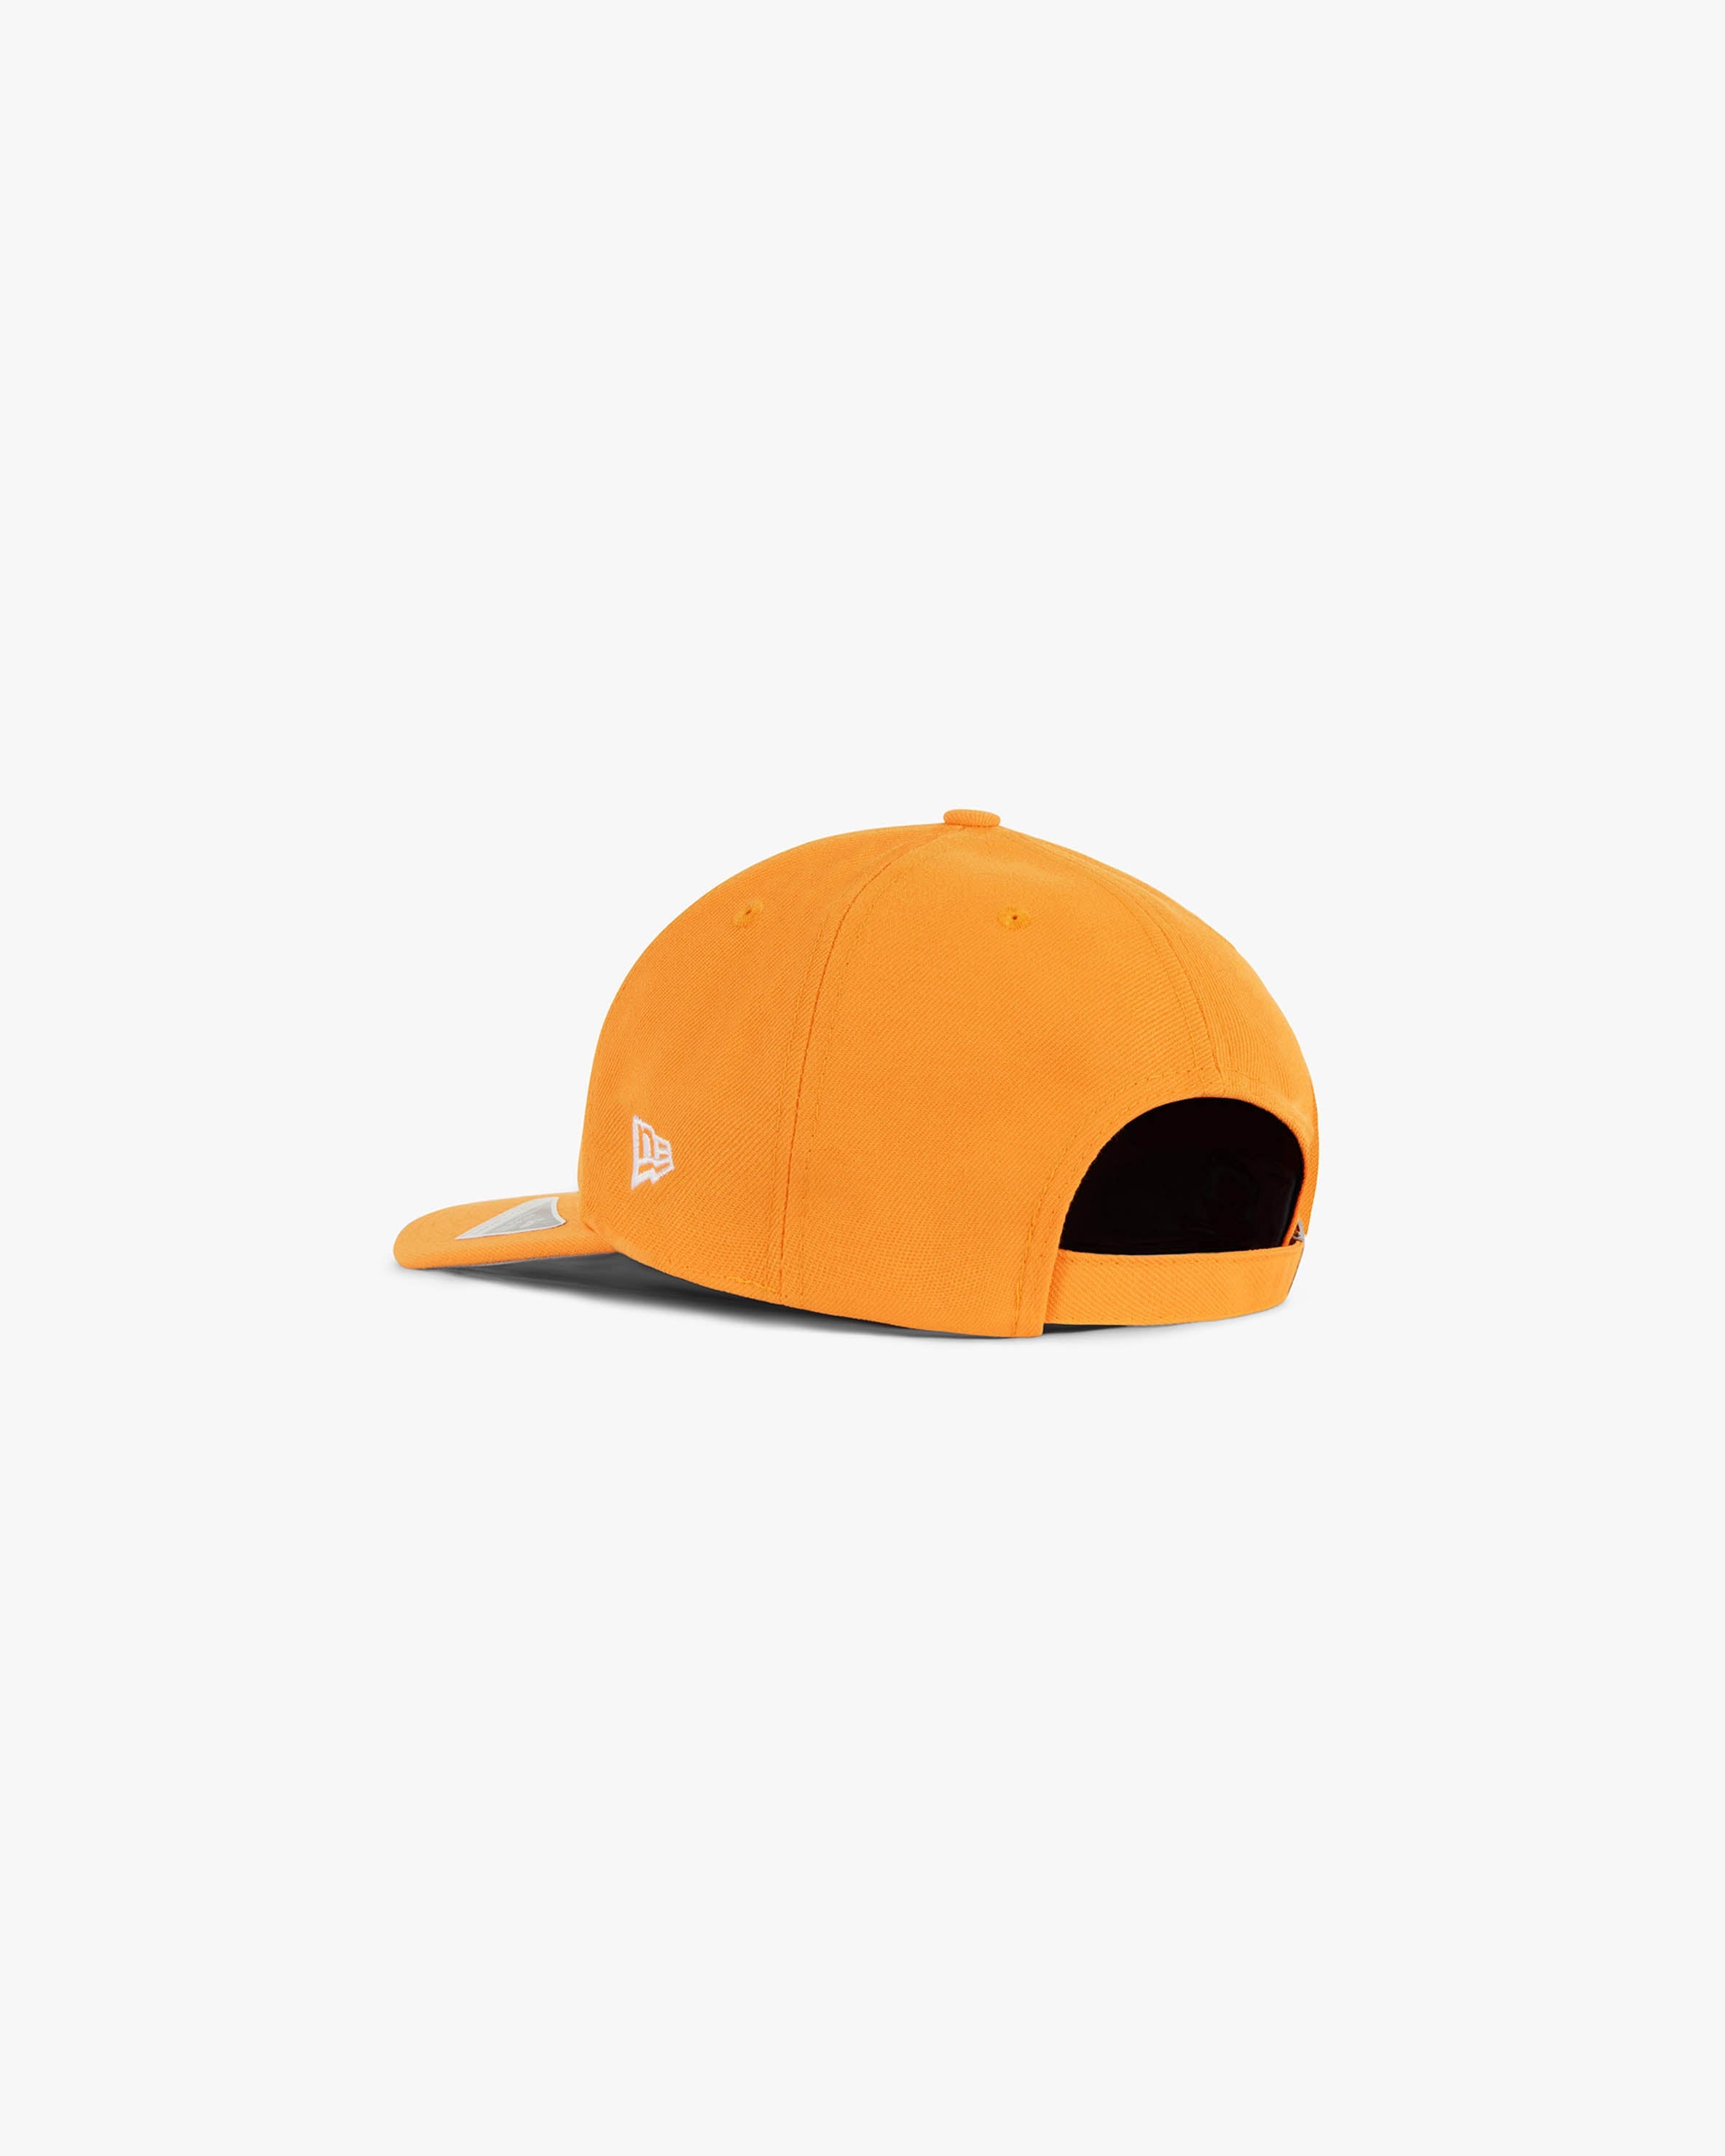 Initial New Era Retro Crown 9Fifty Cap - Neon Orange